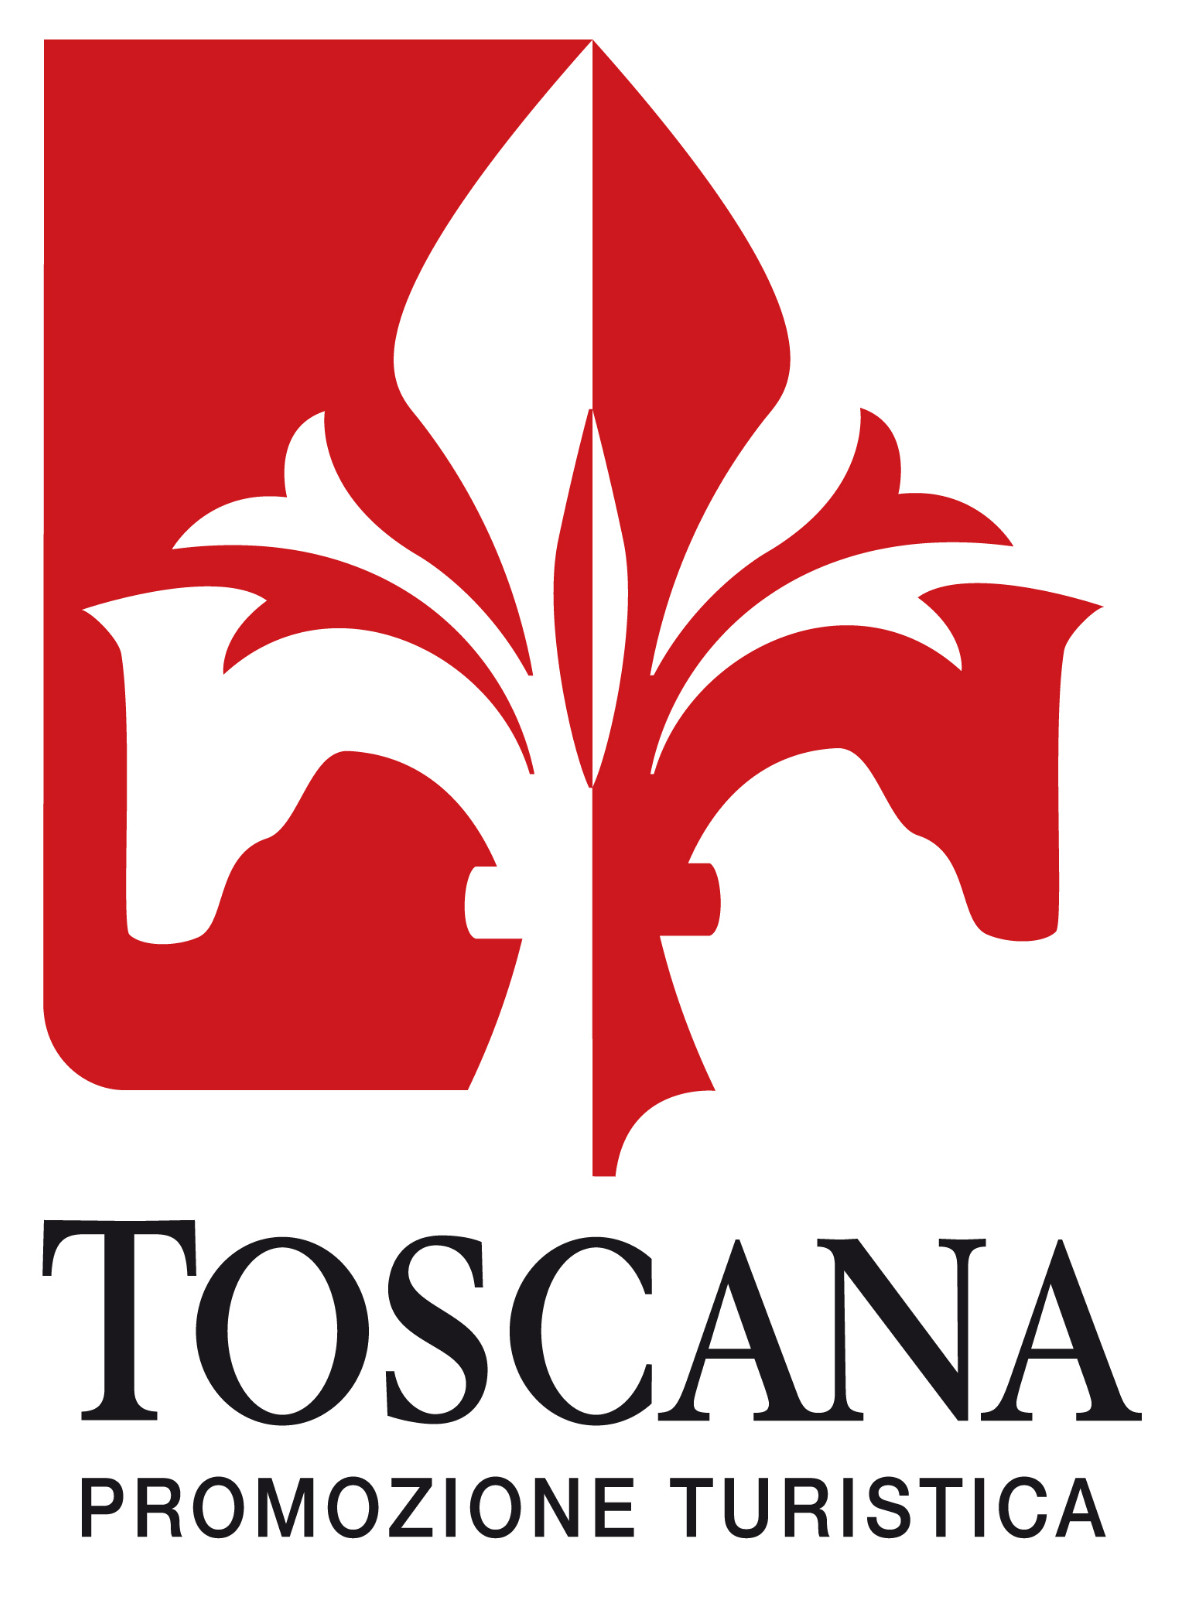 Tuscany Tourist Board